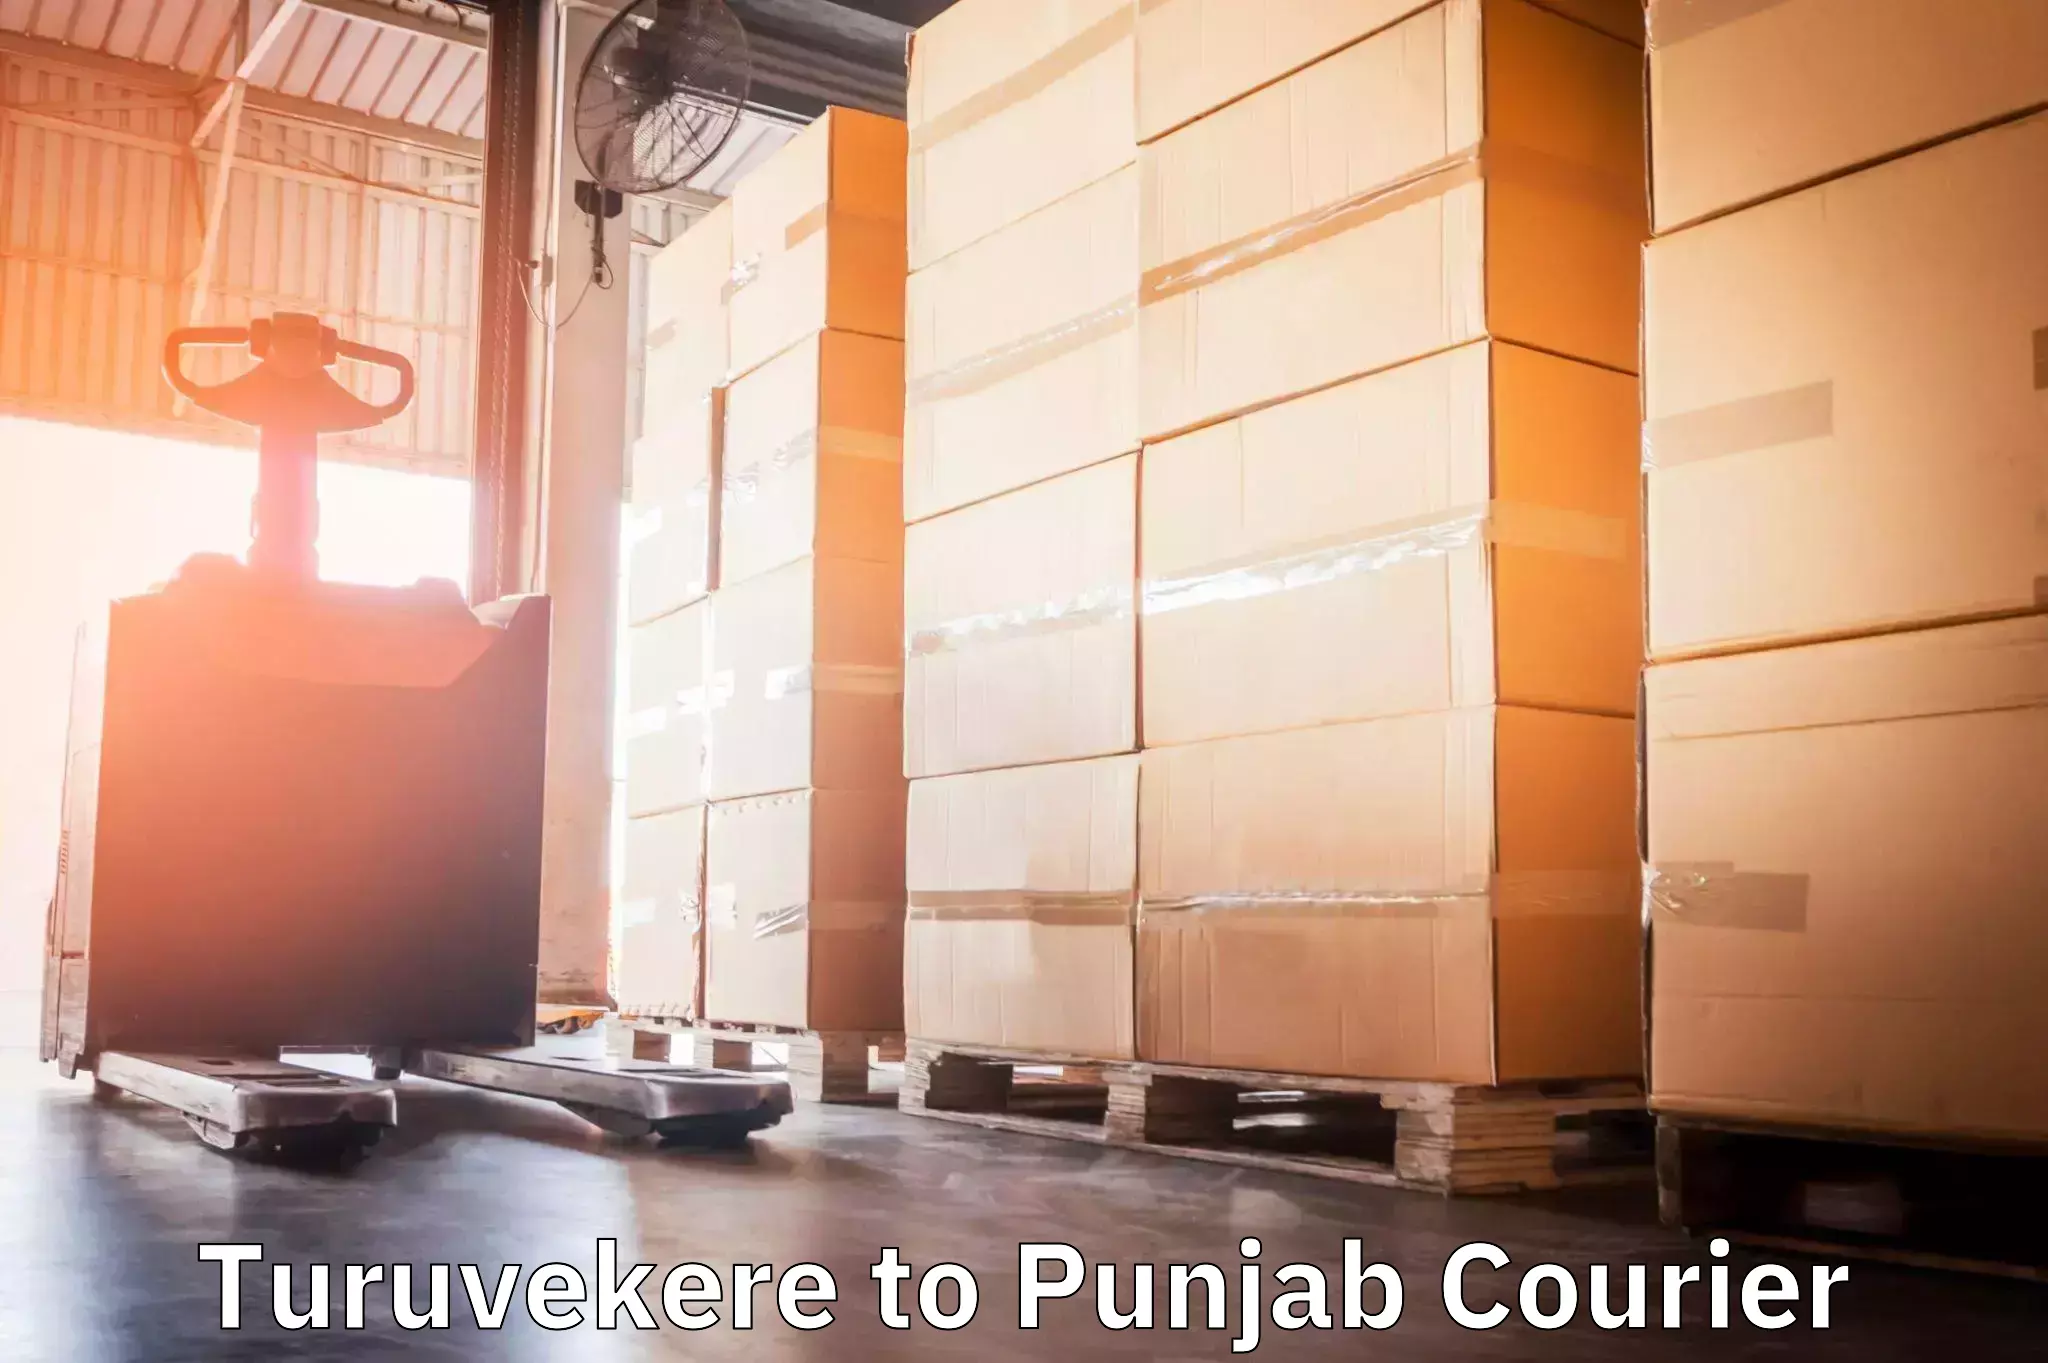 Advanced shipping technology Turuvekere to Punjab